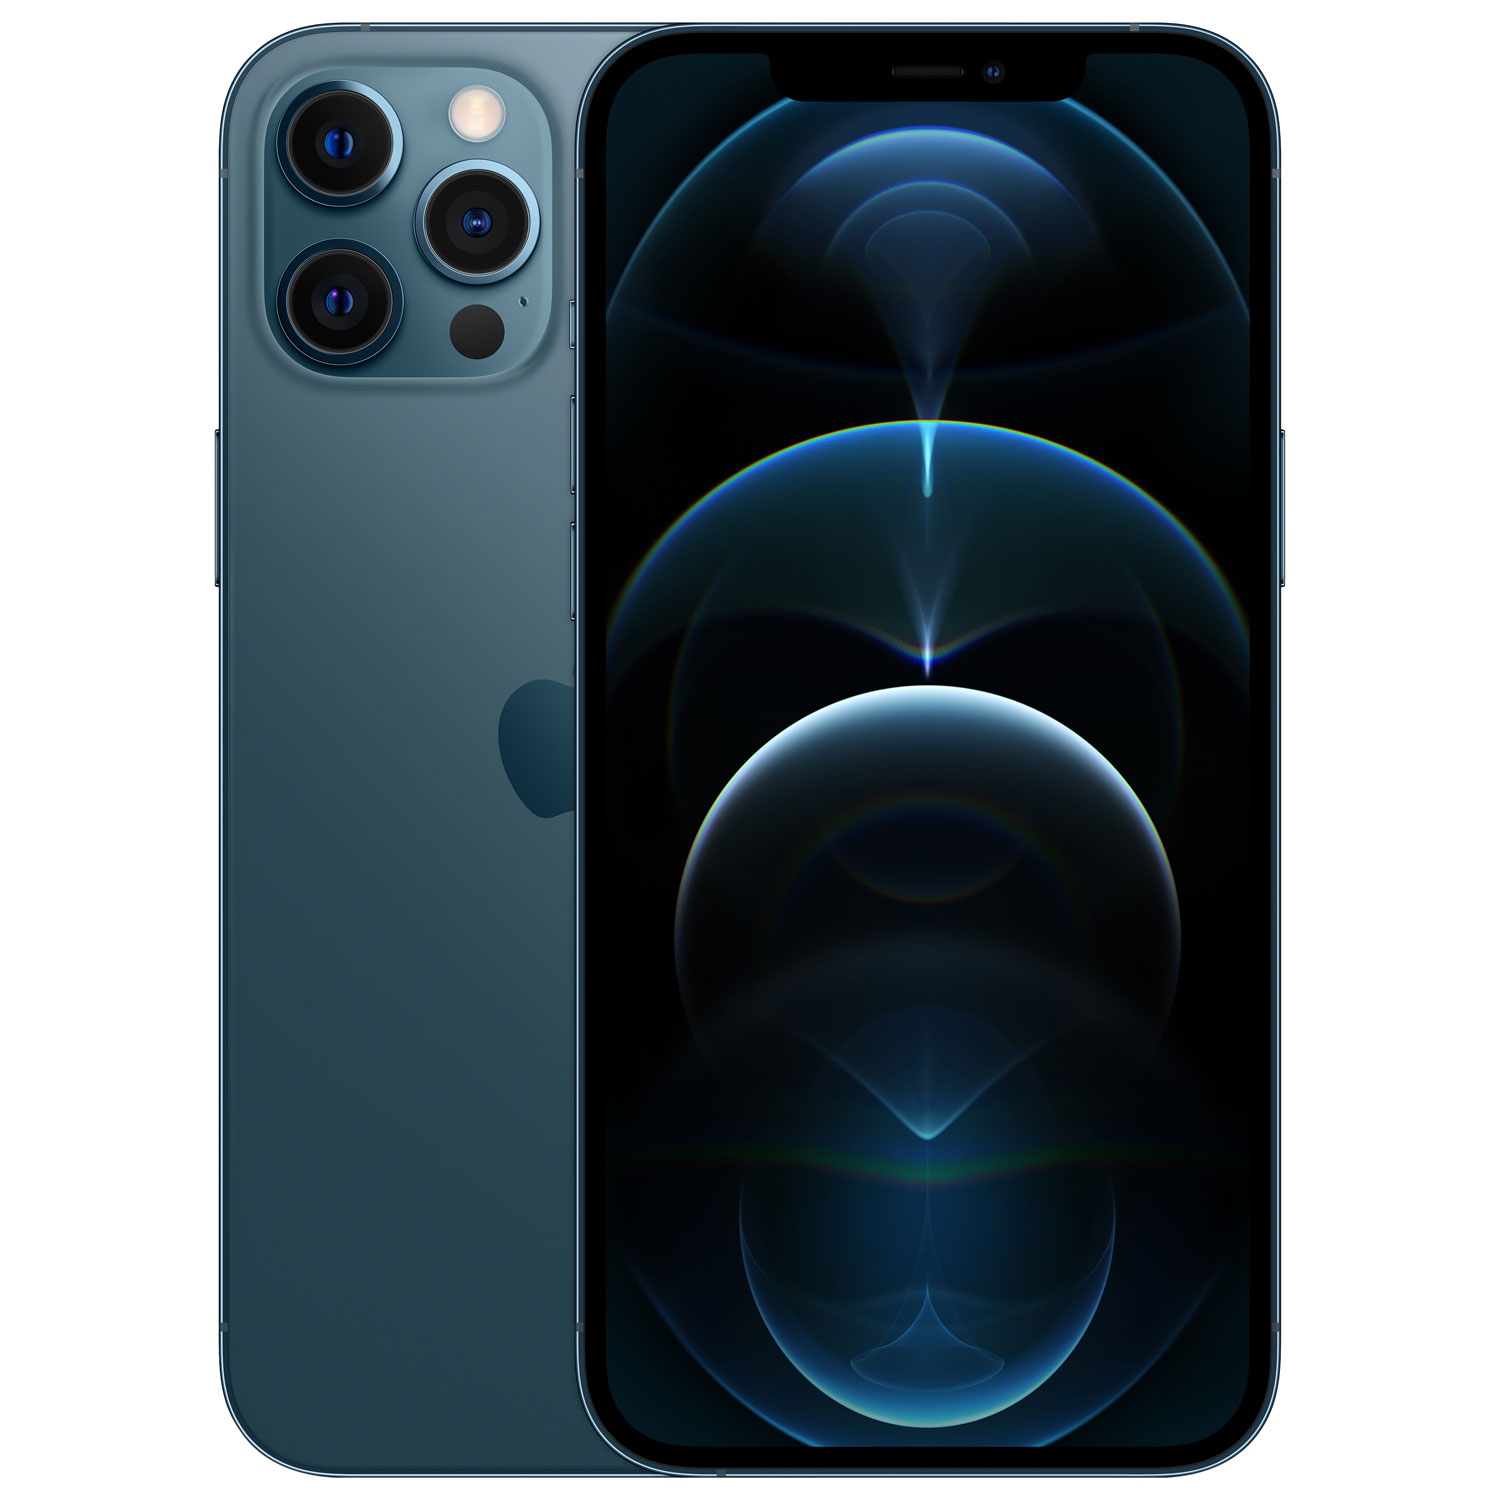 Apple iPhone 12 Pro Max 256GB - Pacific Blue - Unlocked - Open Box ( 10 / 10 Condition )